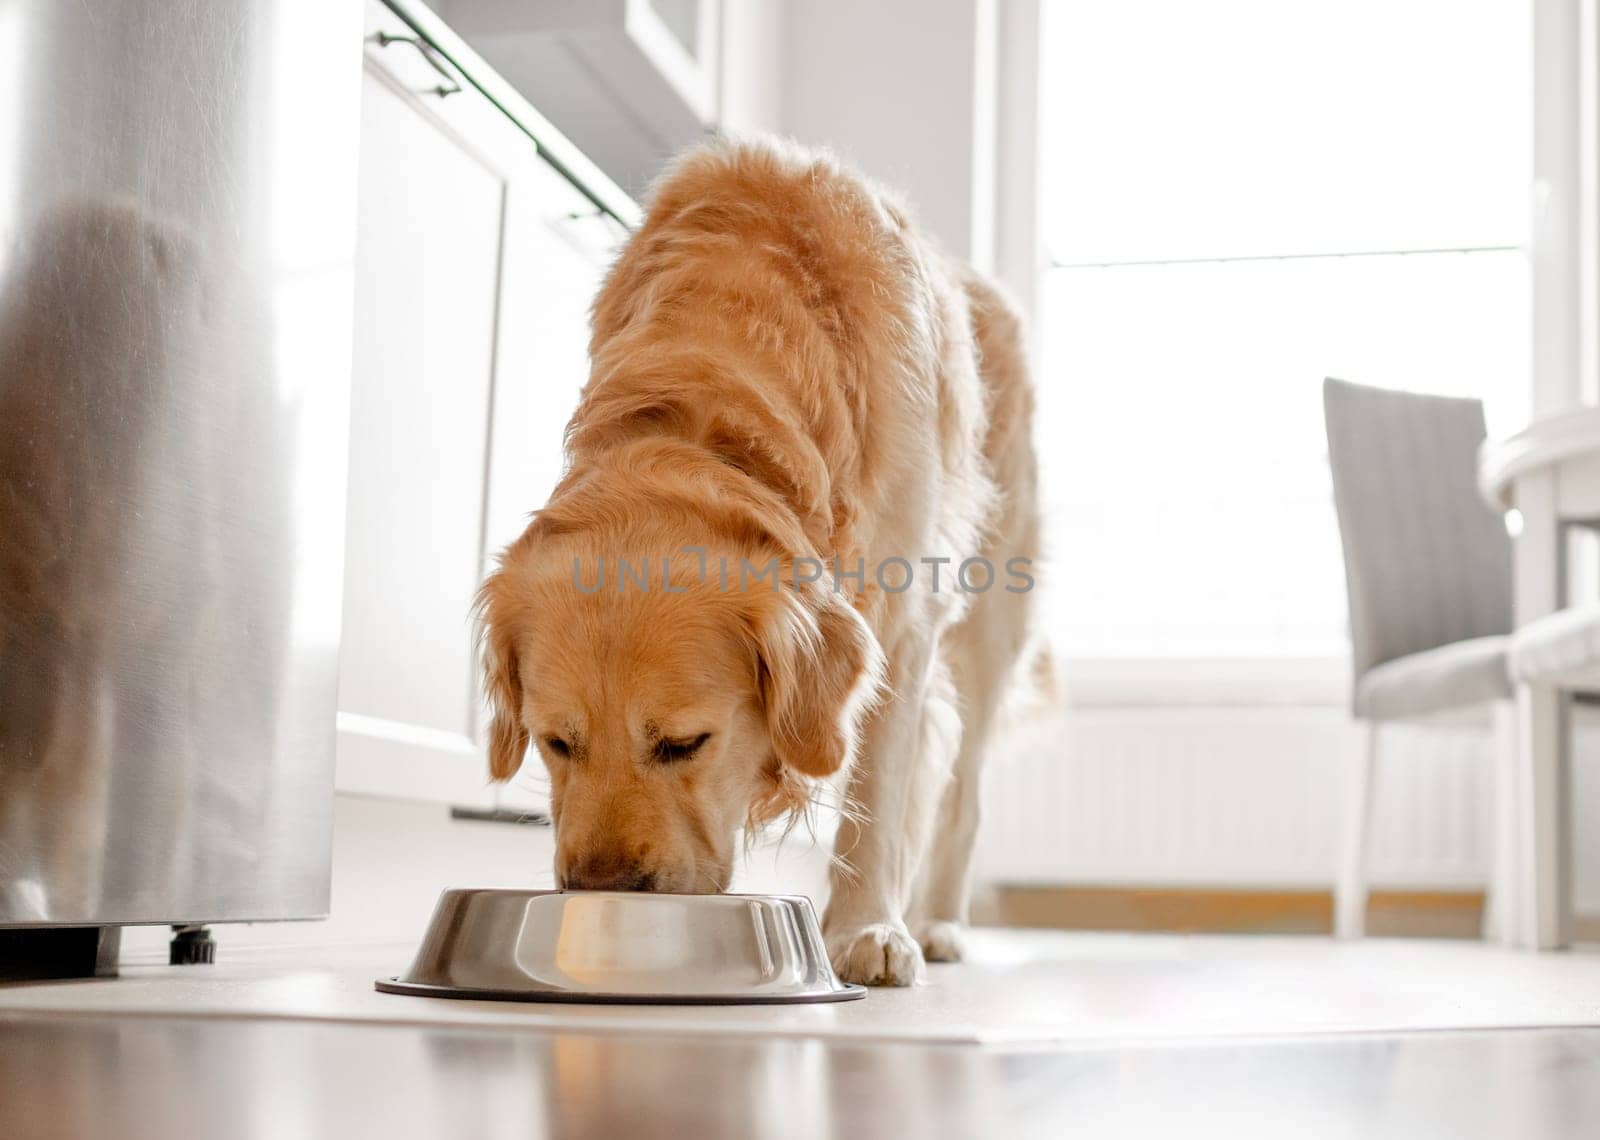 Golden Retriever Dog Eats From Bowl In Kitchen by tan4ikk1